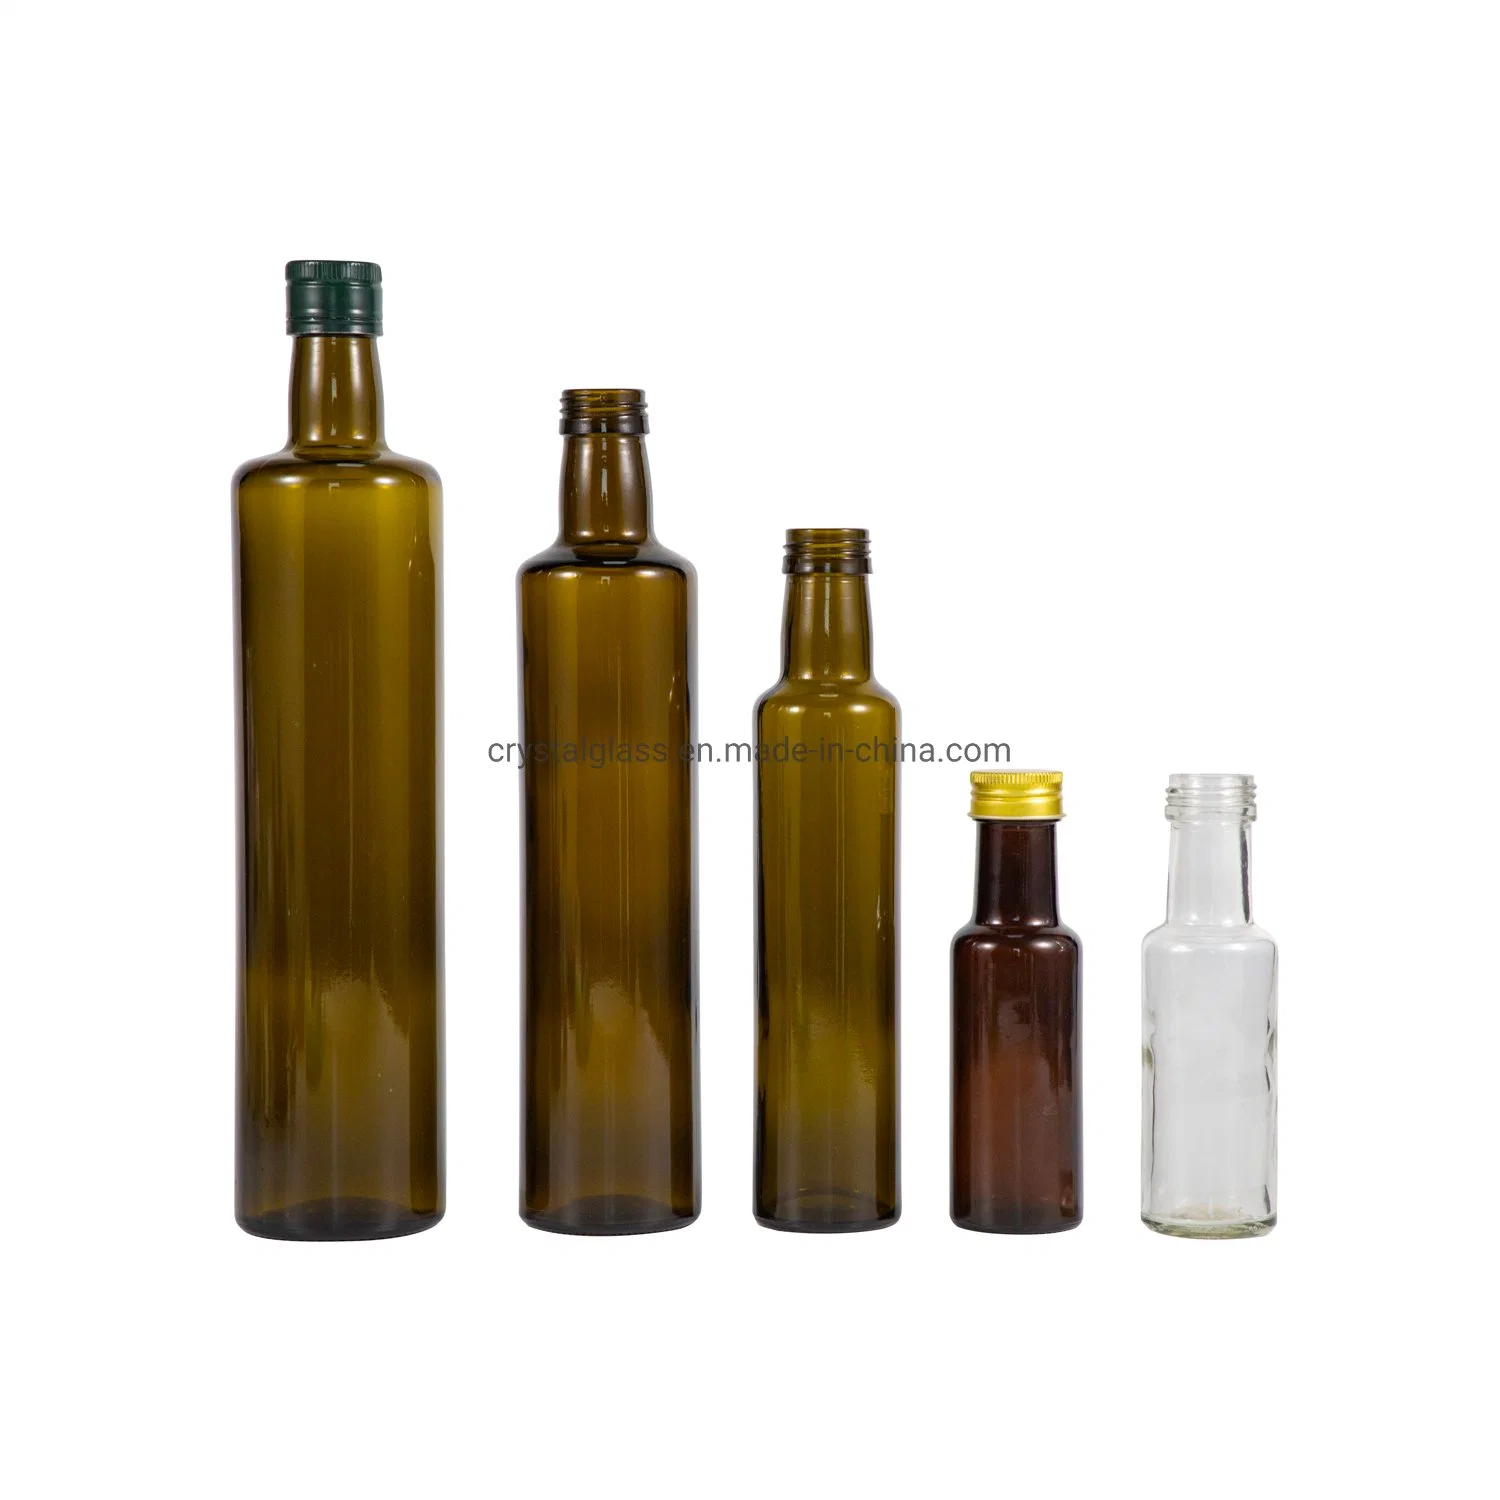 Tawny Round 100ml 250ml 500ml 750ml Olive Oil Spice Glass Bottle Set